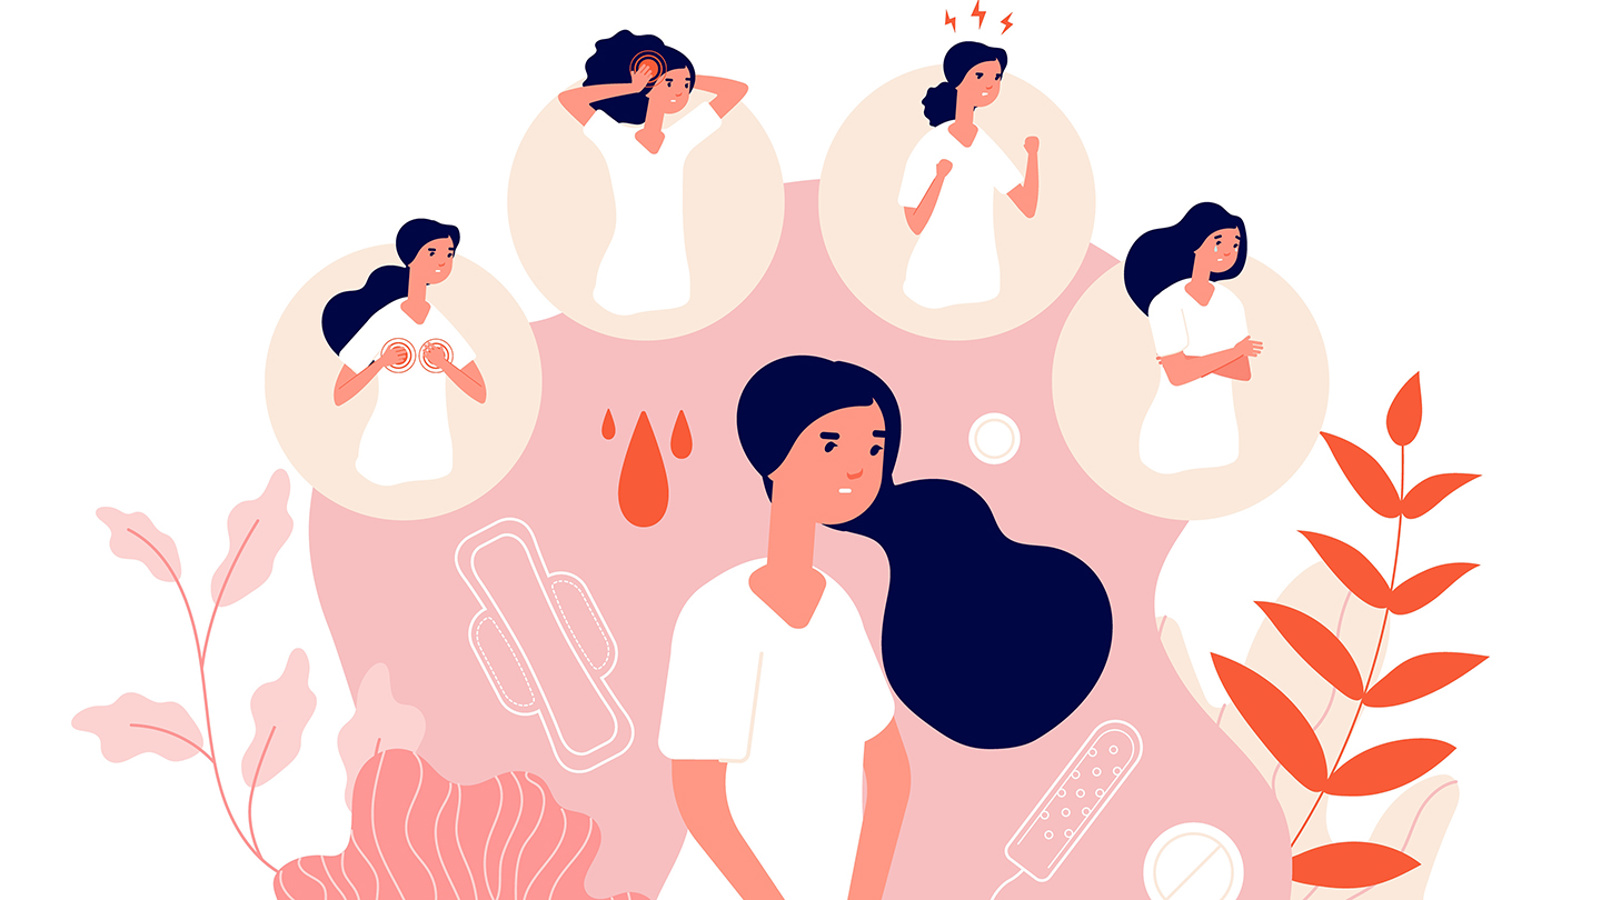 Illustration about menstruation